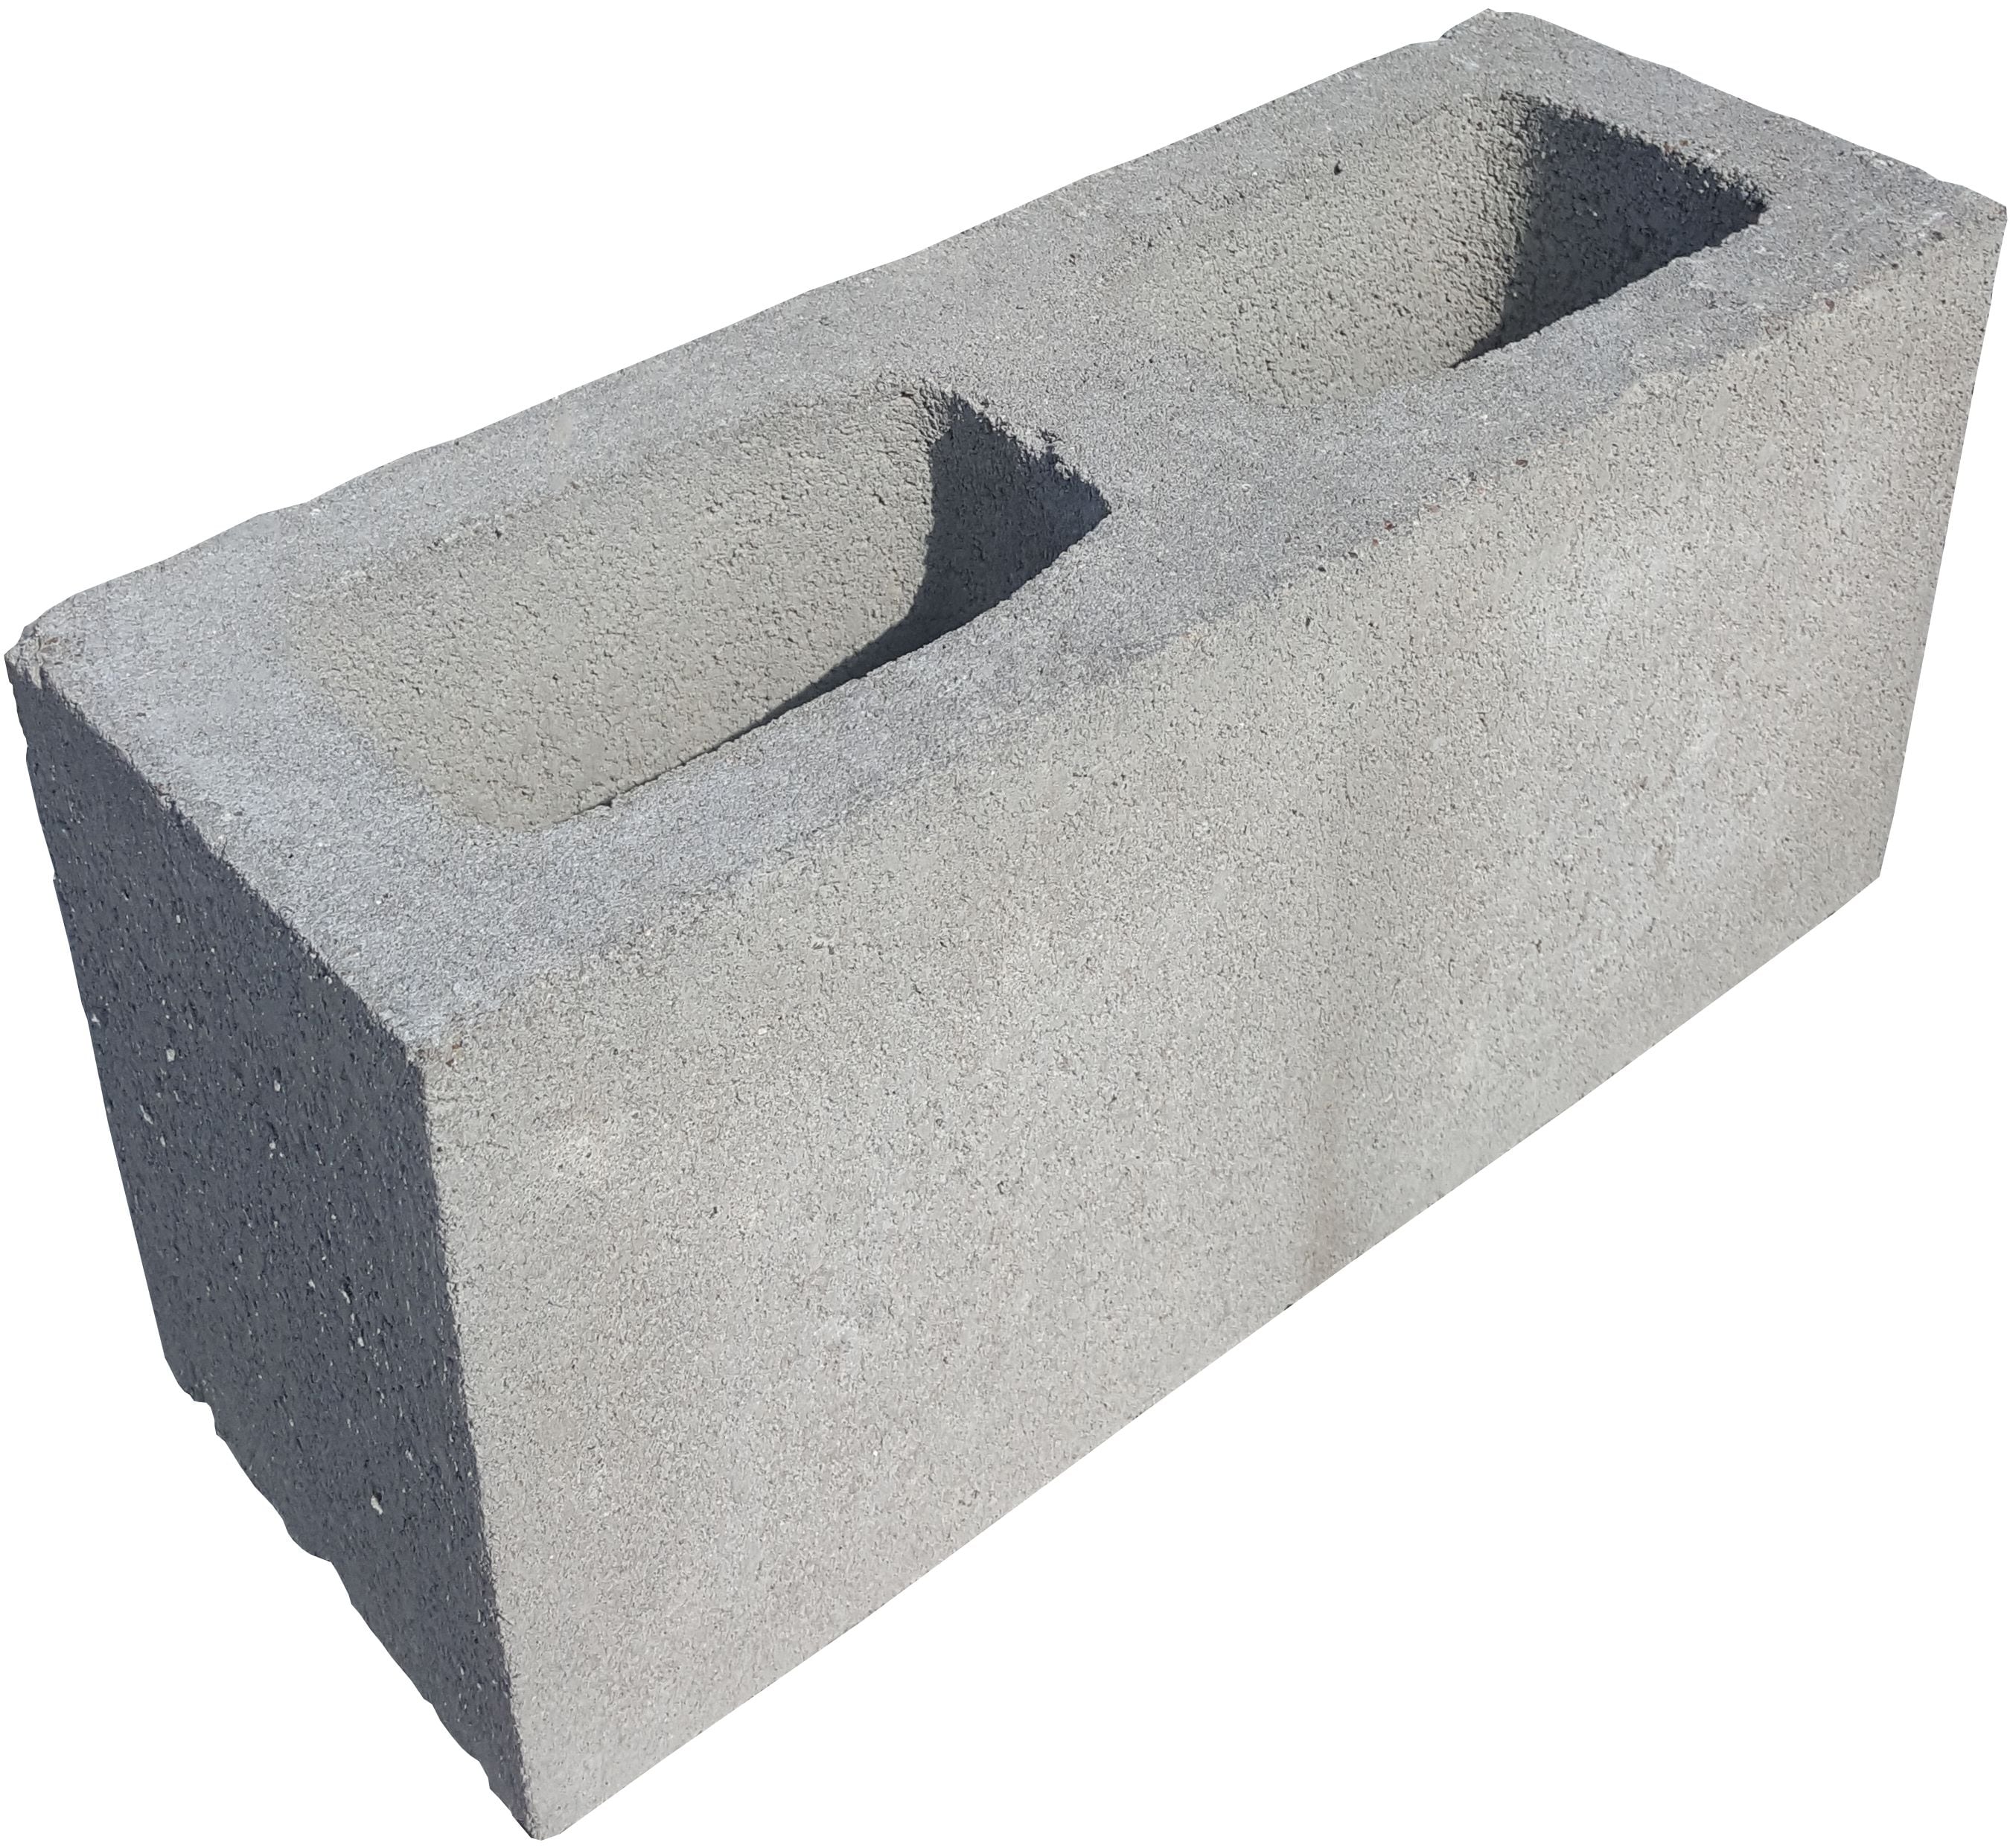 concrete bricks